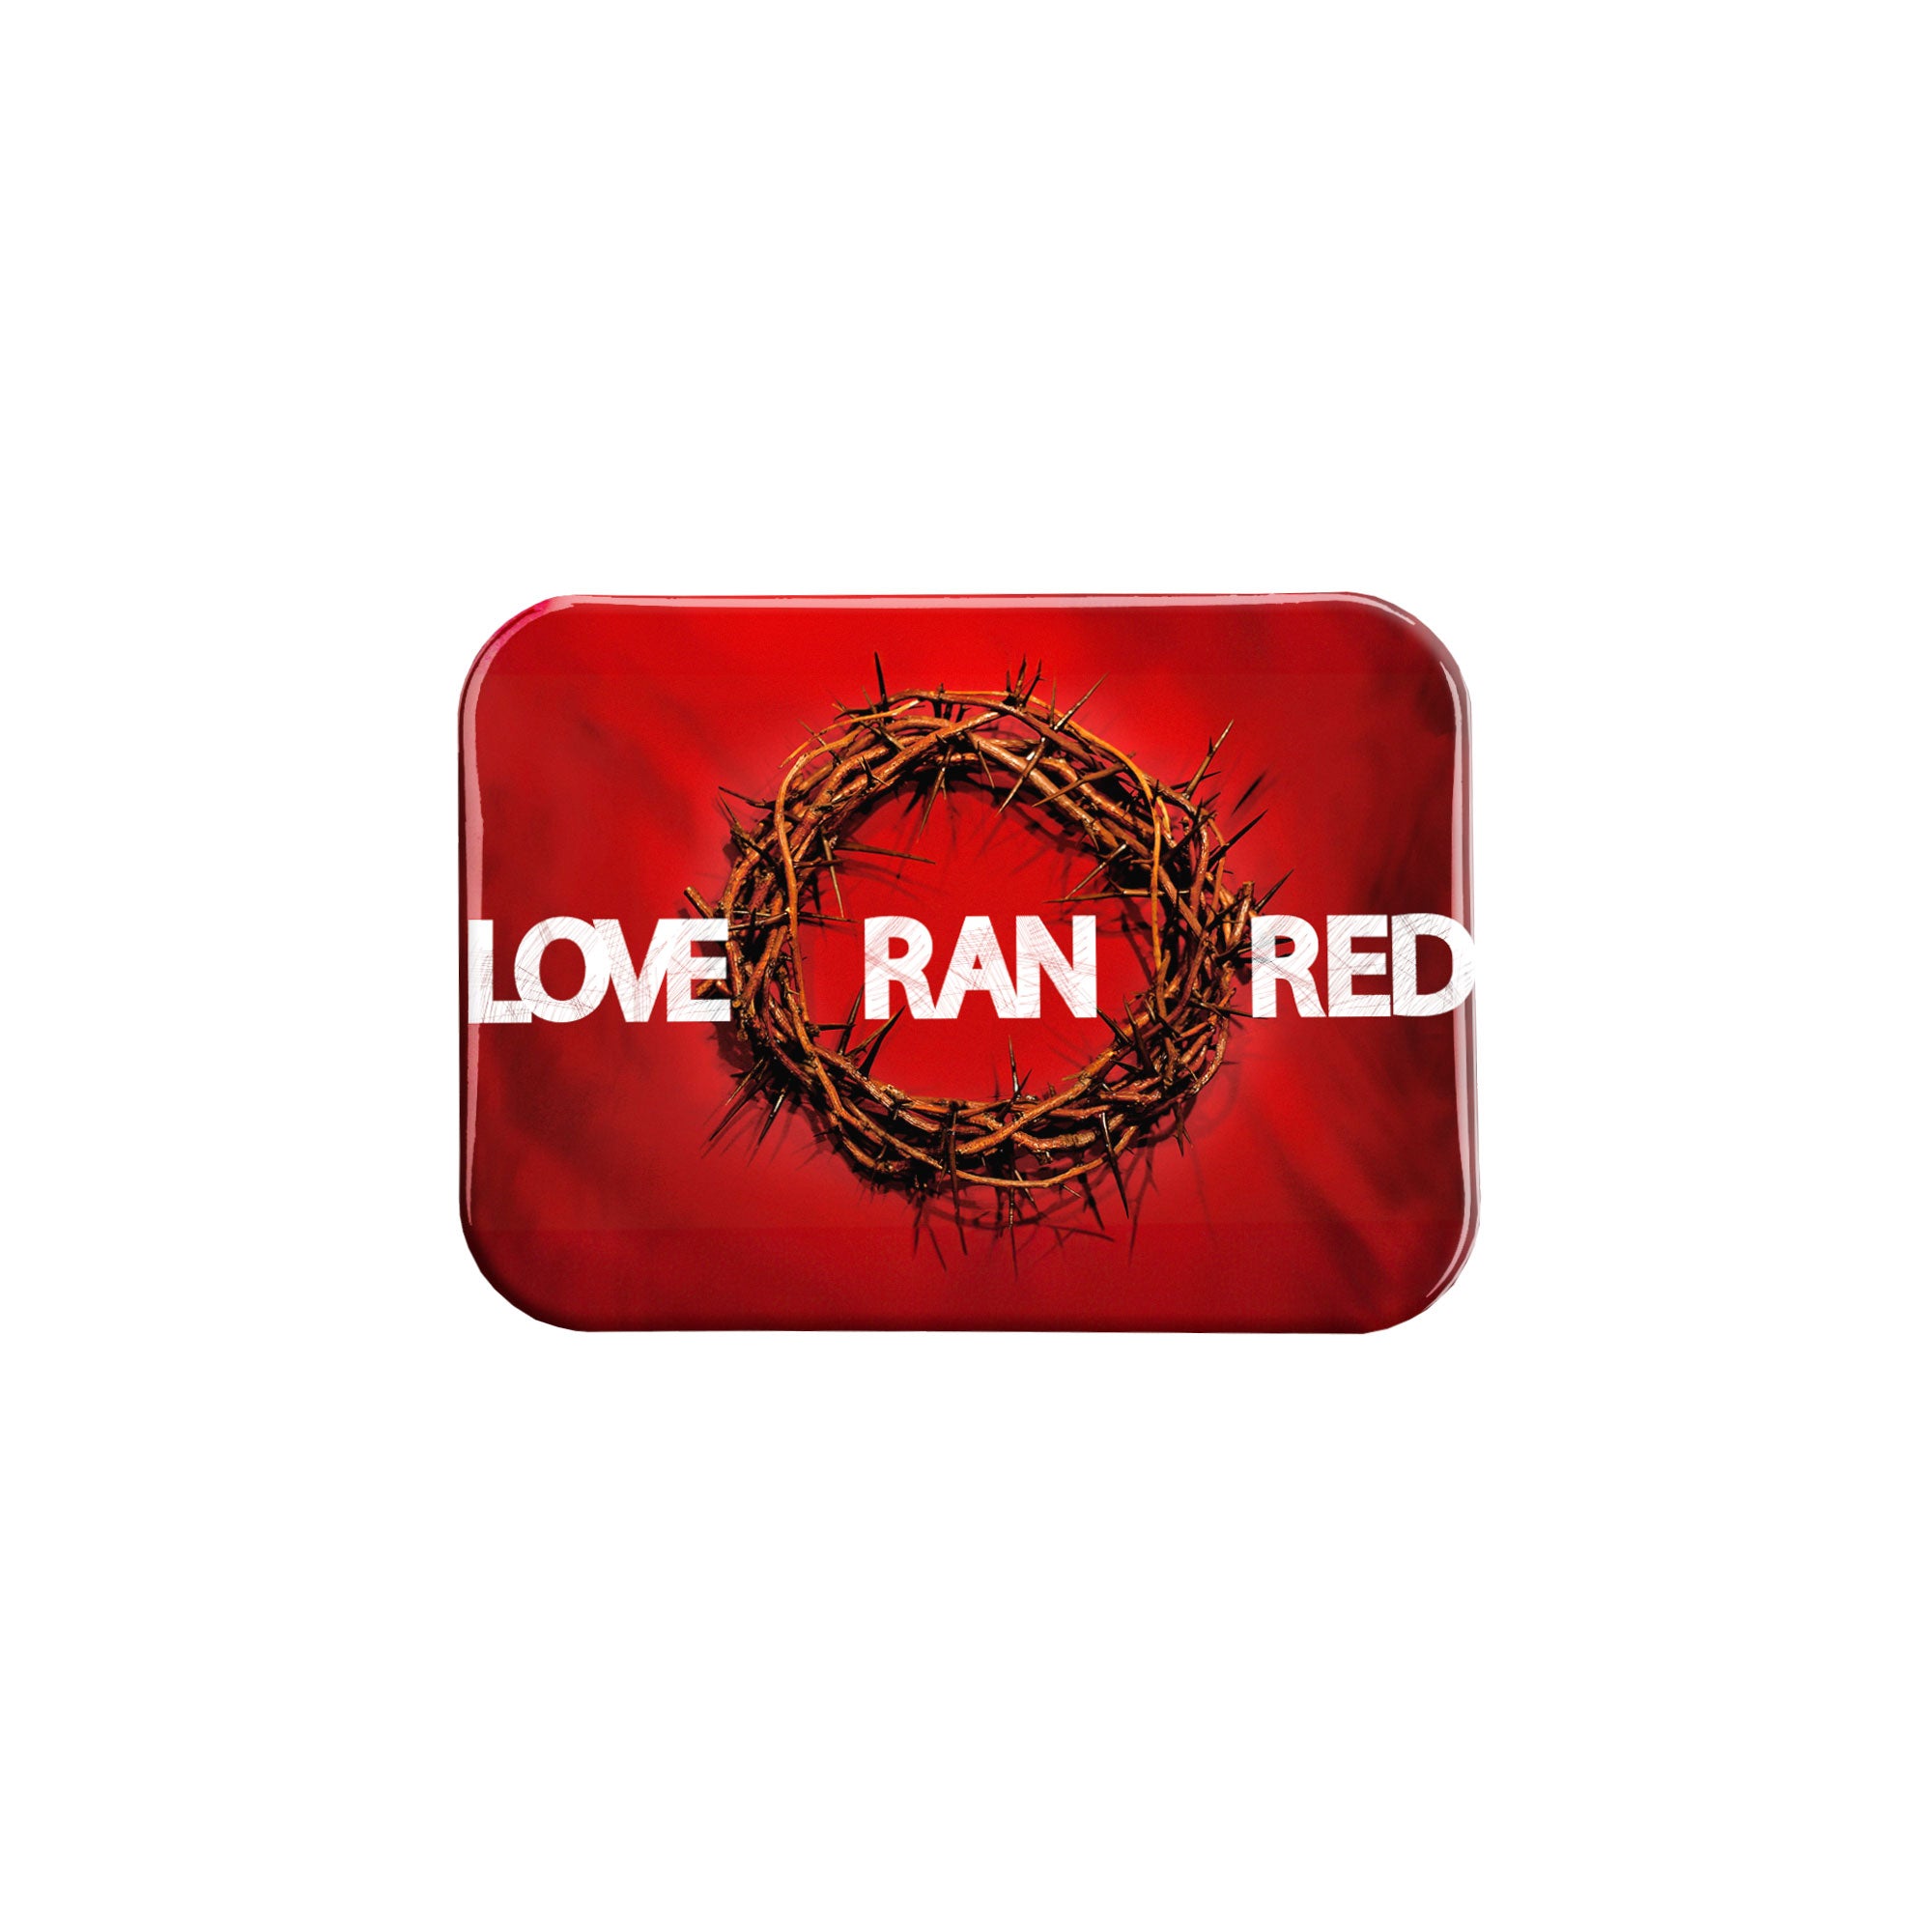 "Love Ran Red" - 2.5" X 3.5" Rectangle Fridge Magnets